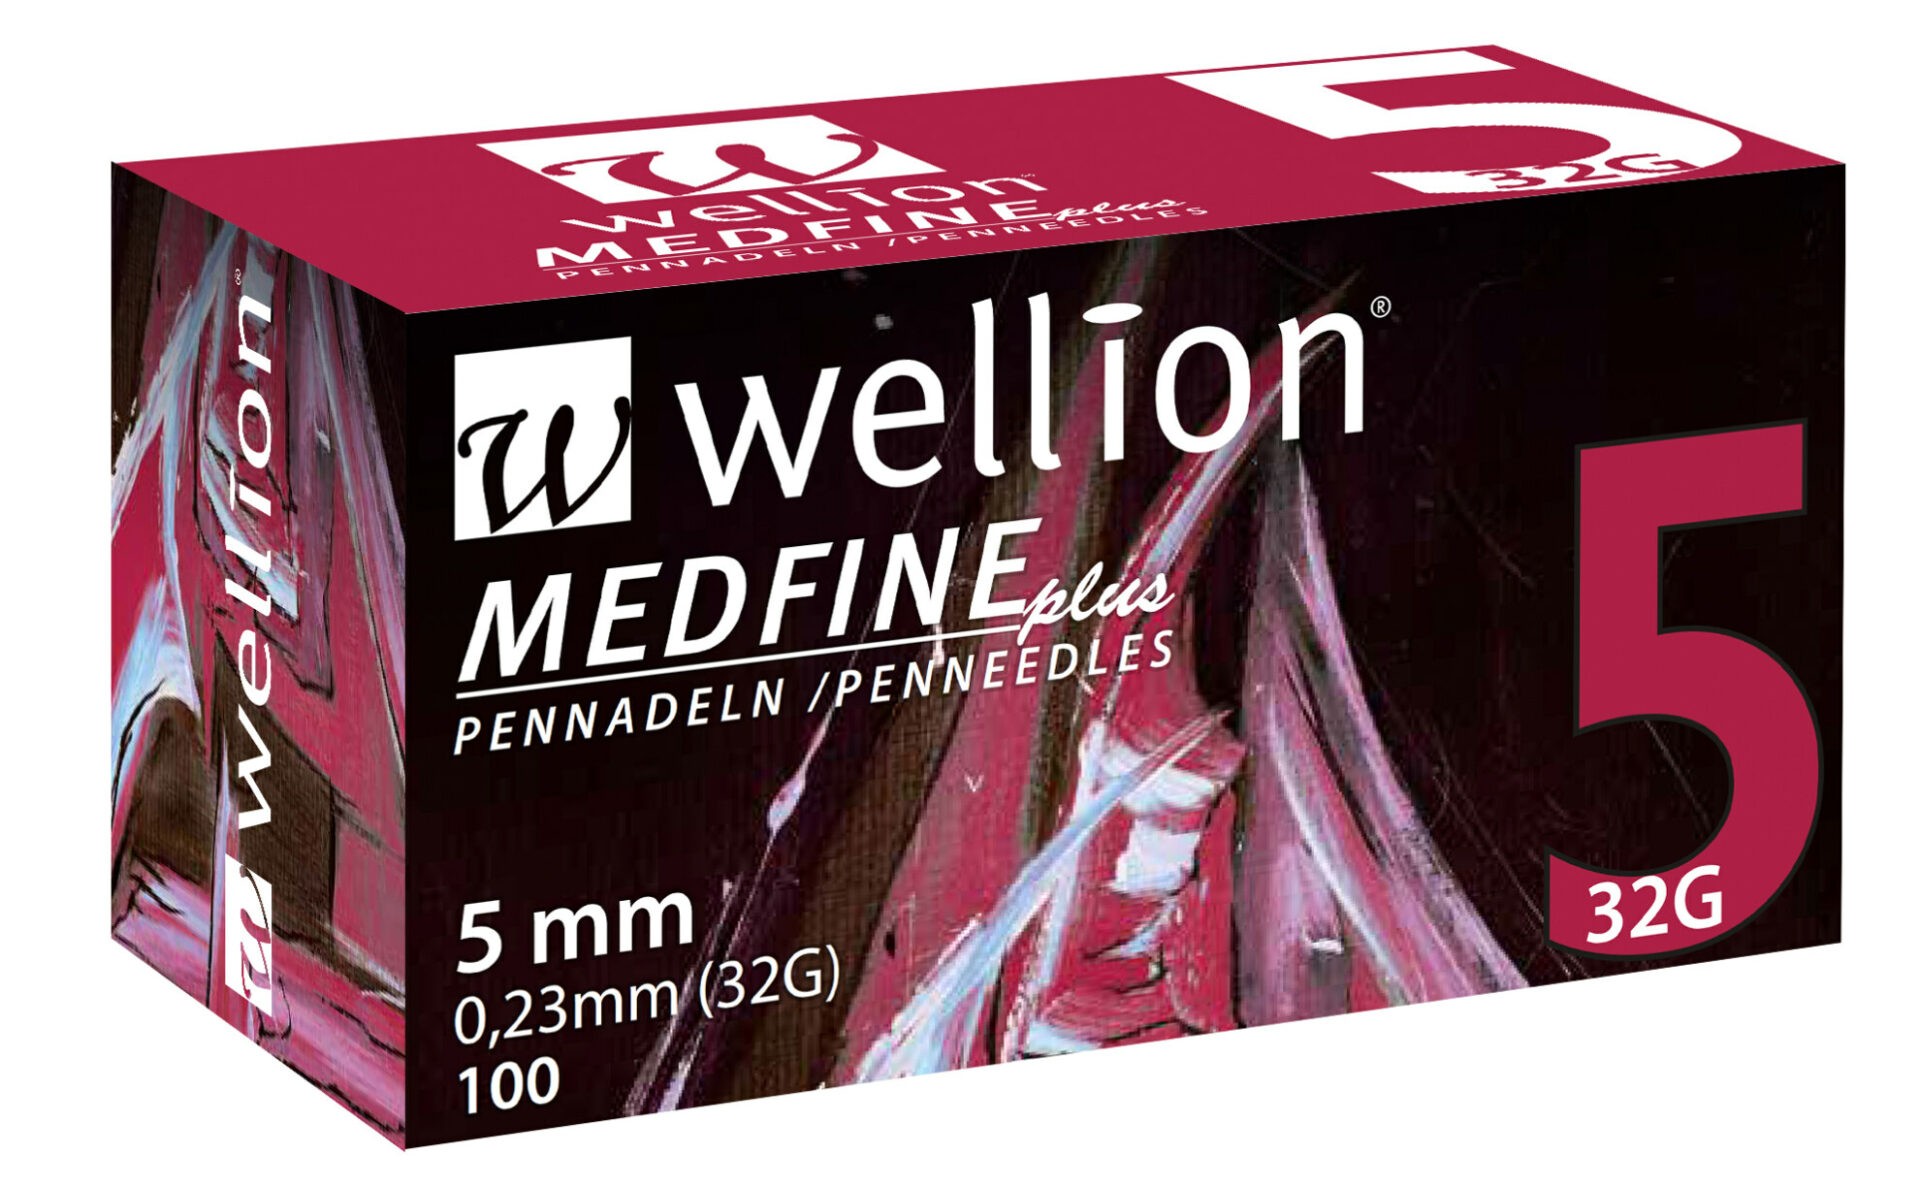 Wellion MEDFINE PLUS igle 32G 5 mm, 100 igel za inzulinska peresa